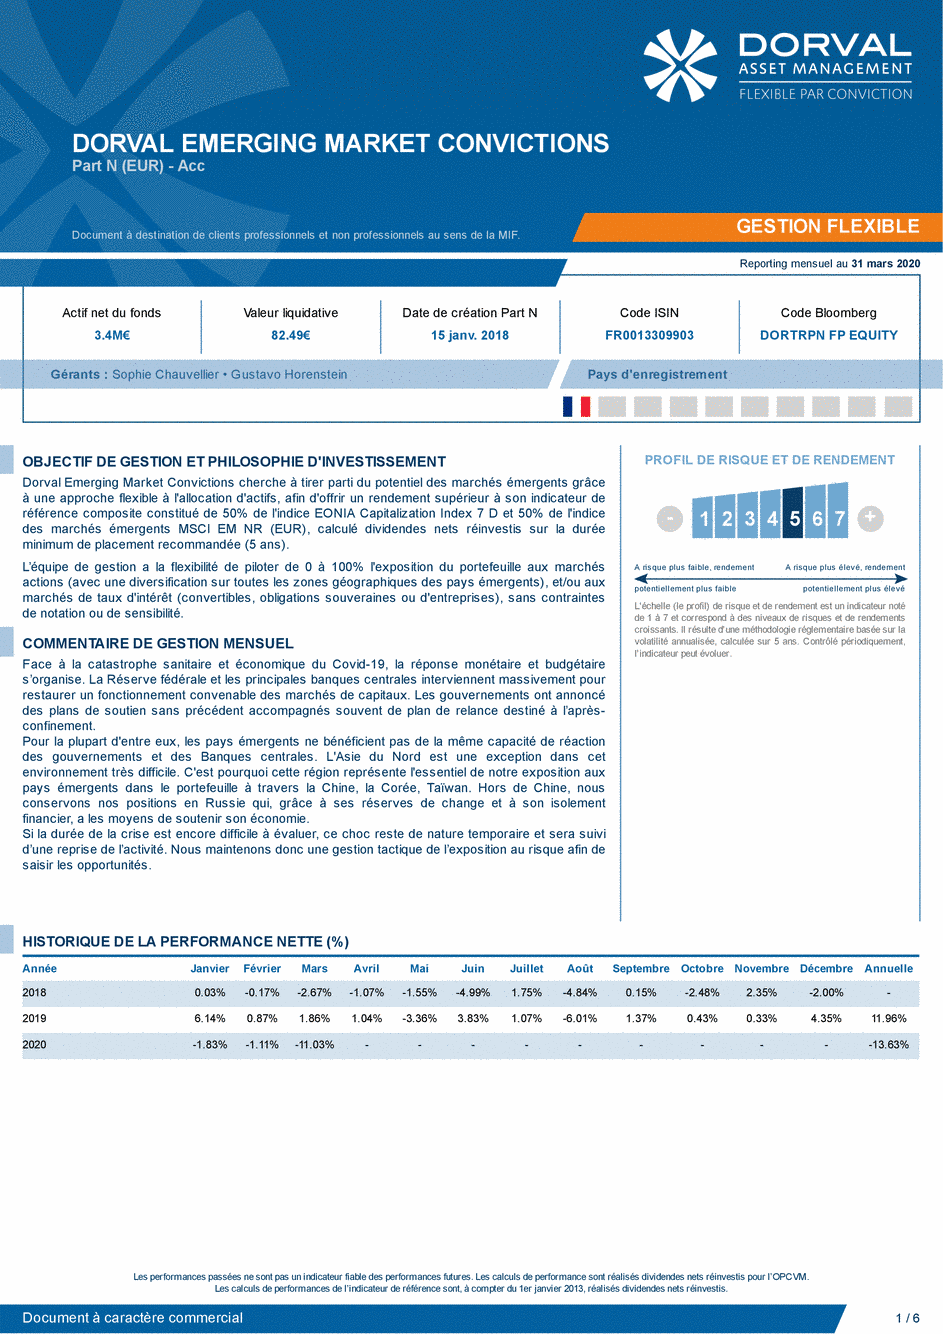 Reporting DORVAL EMERGING MARKET CONVICTIONS N - 31/03/2020 - Français